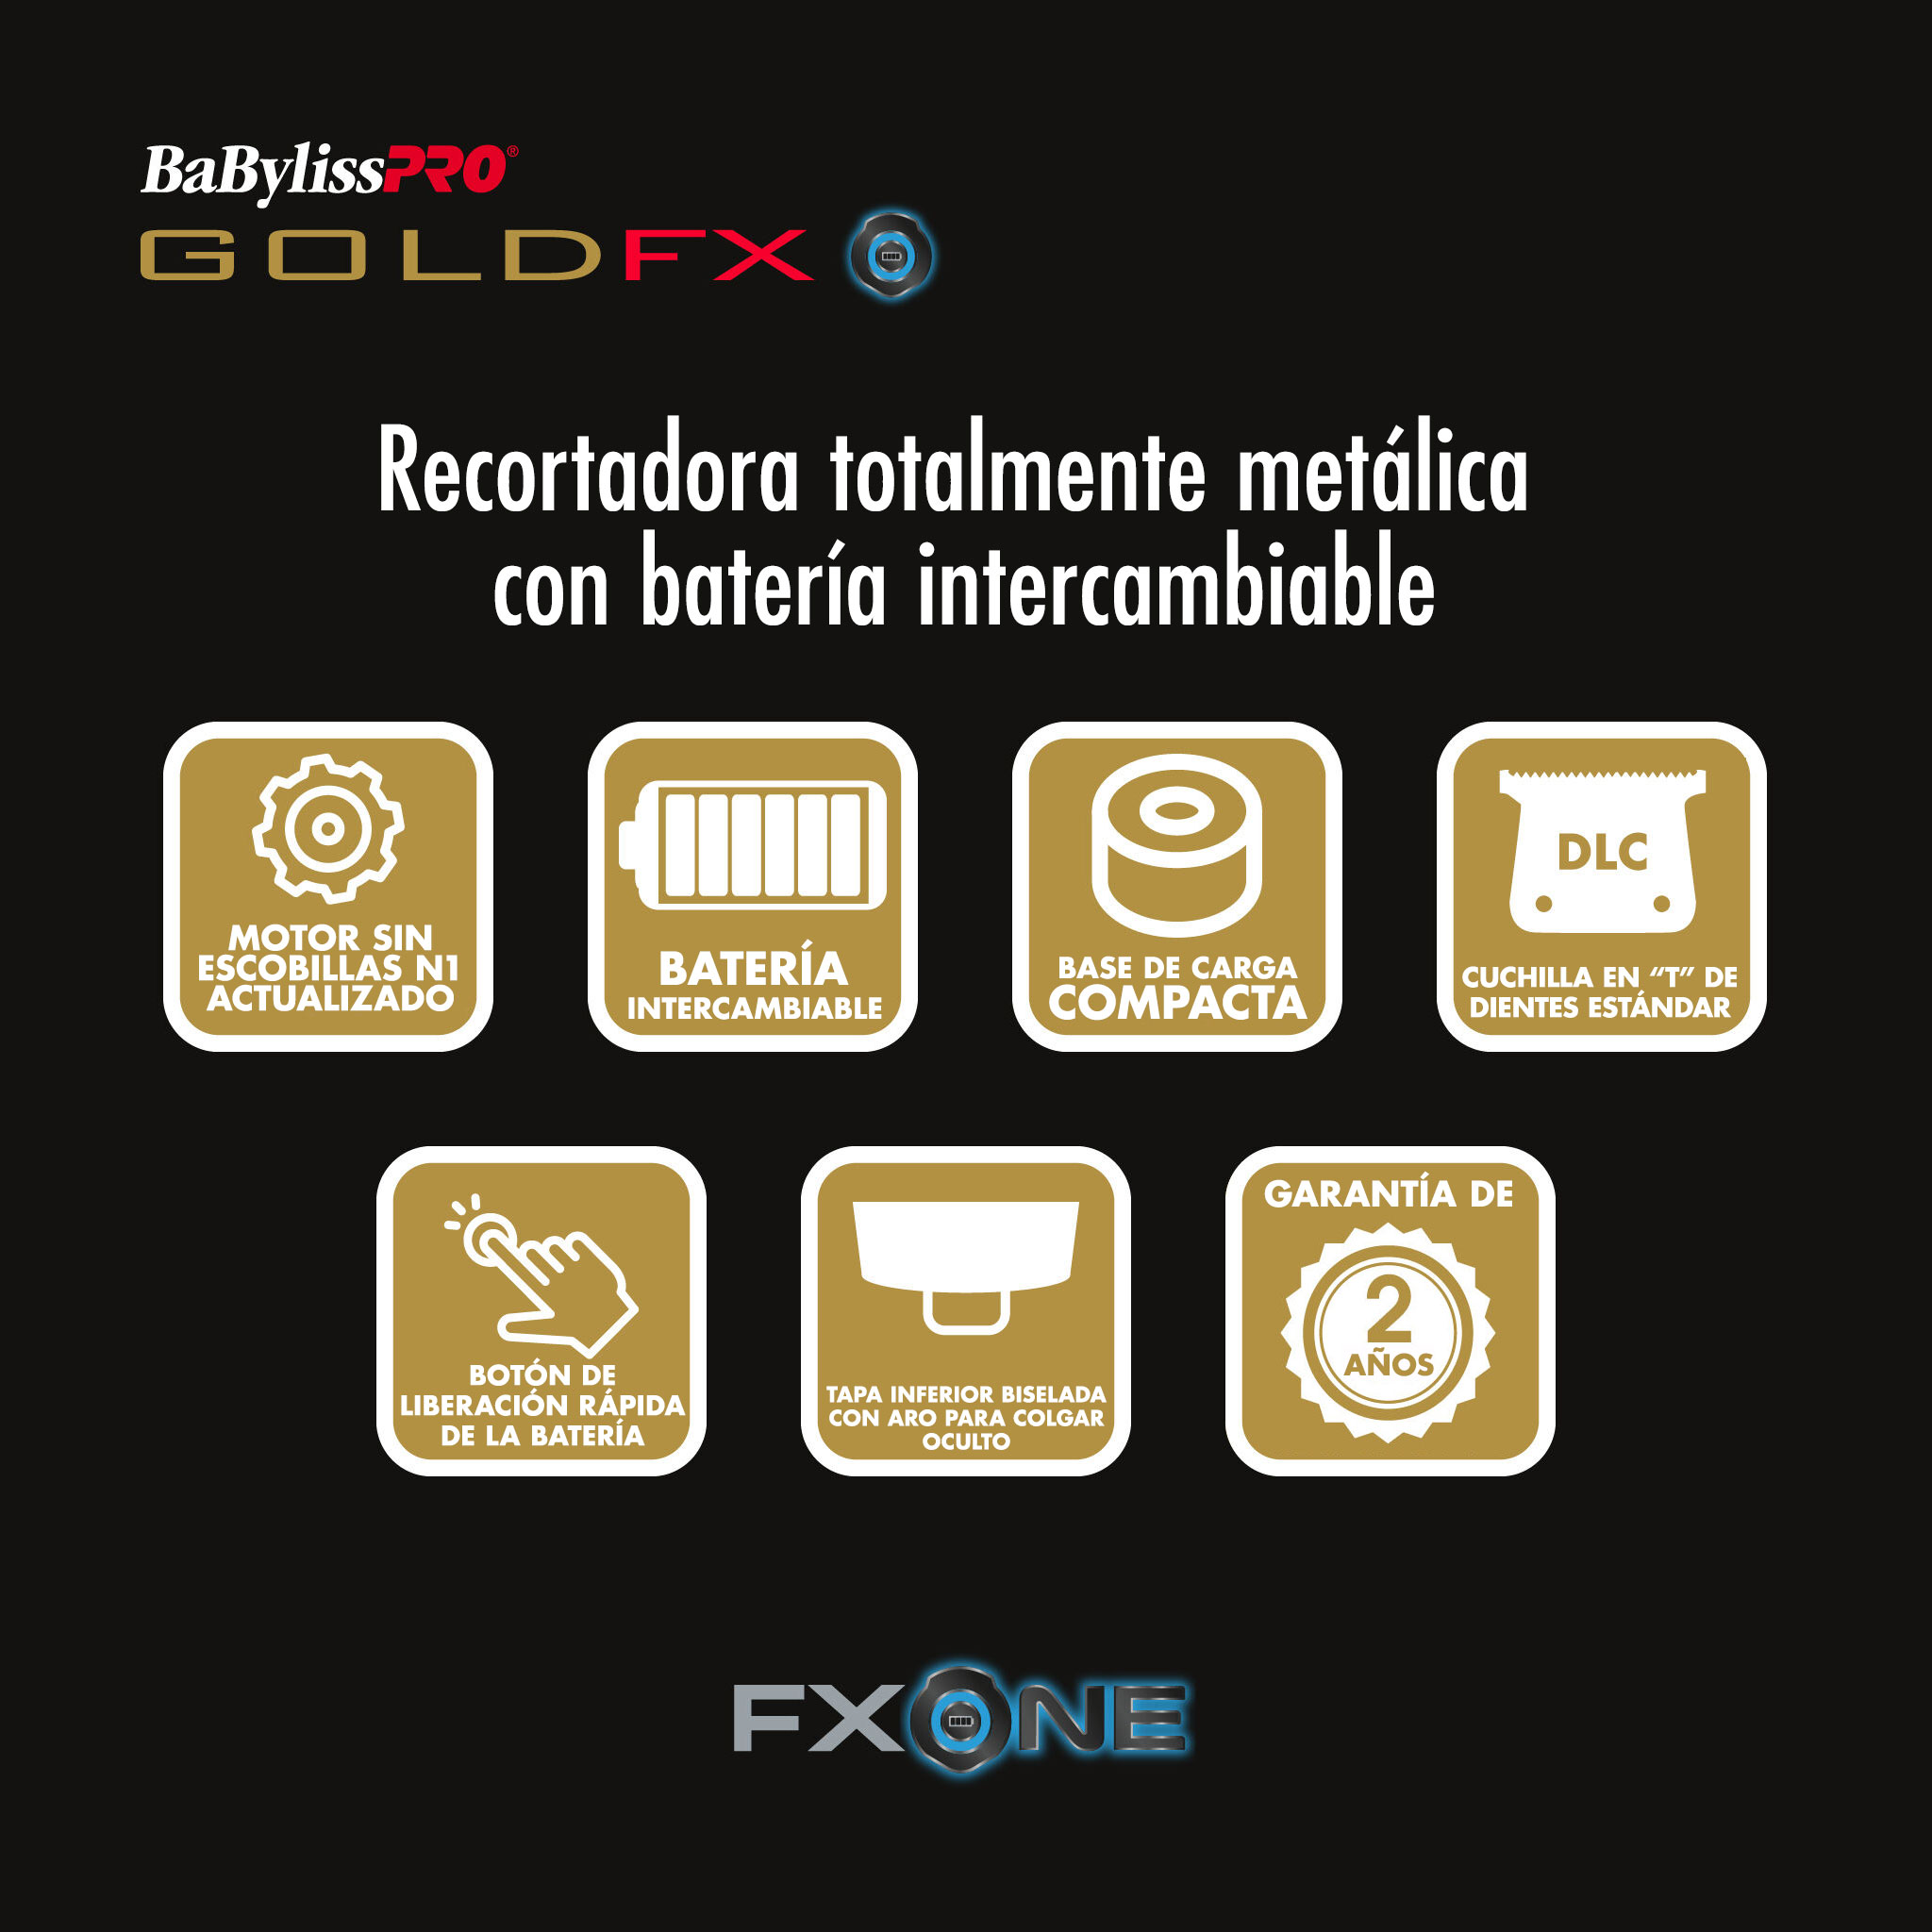 Recortadora FXONE GoldFX de BaBylissPRO®